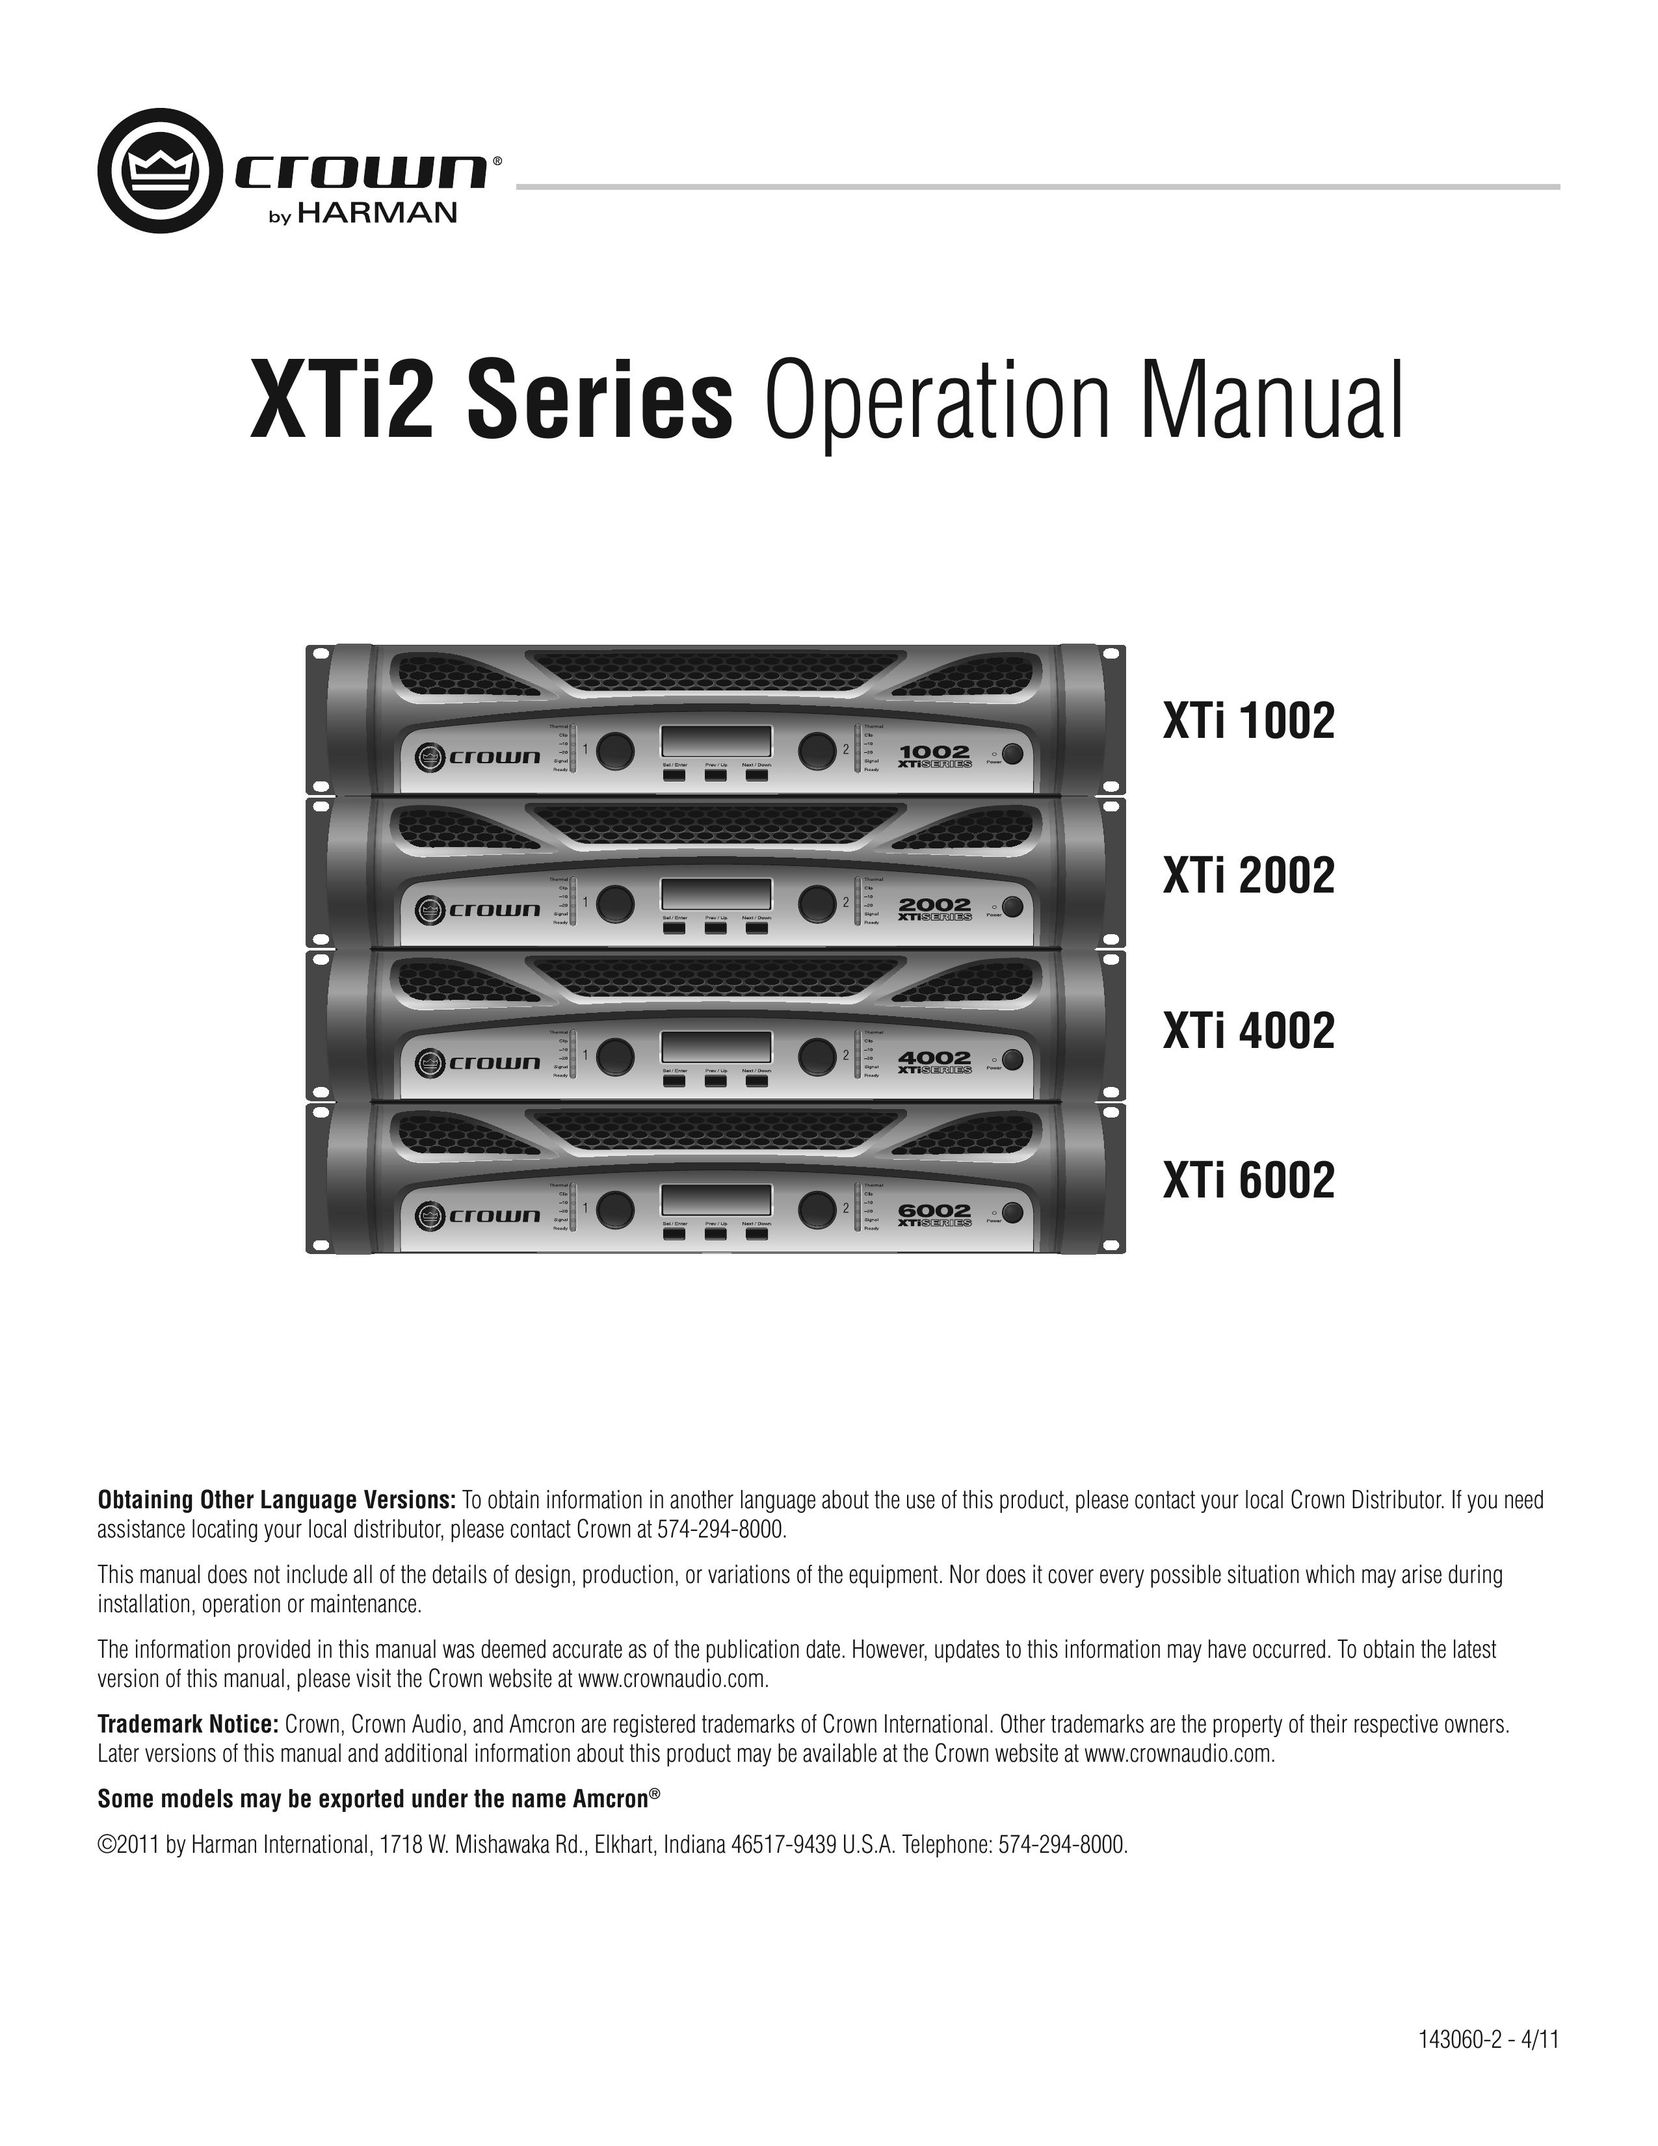 Crown XTI 1002 Car Amplifier User Manual